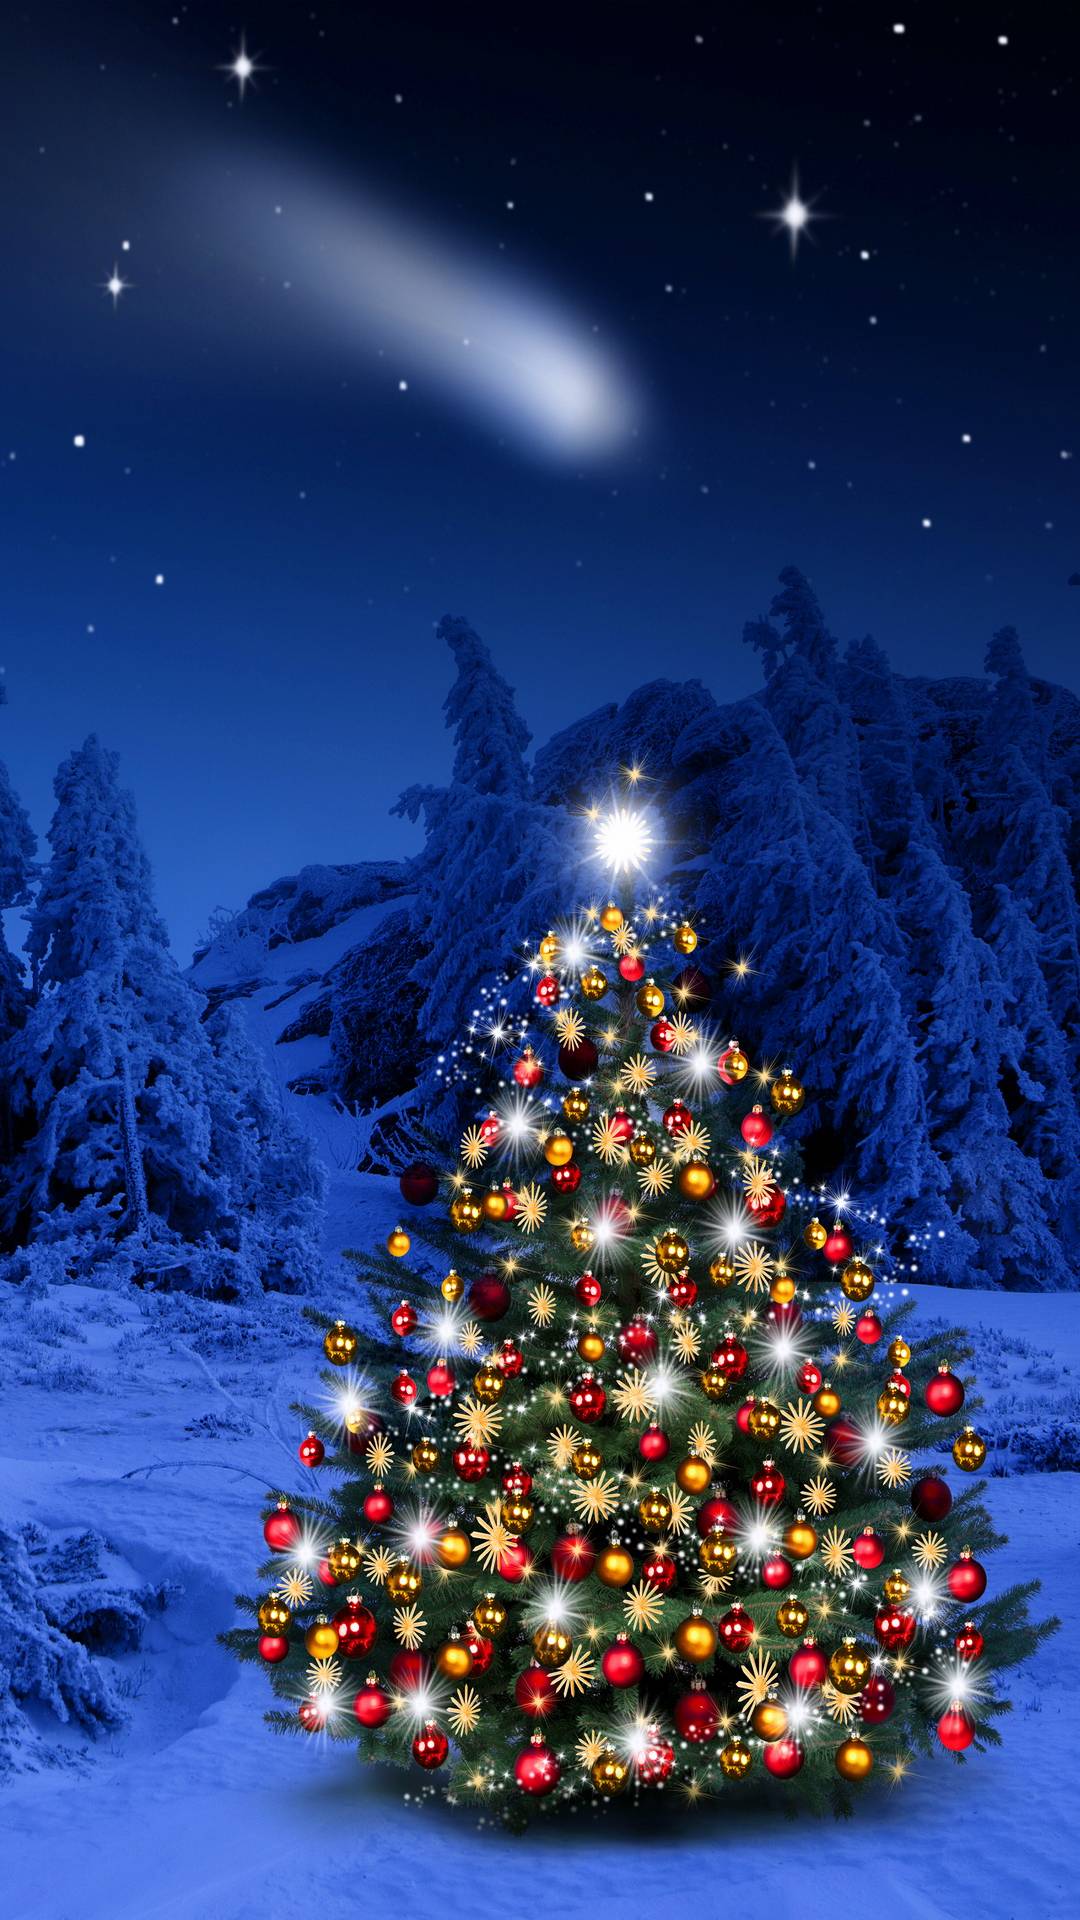 Winter Christmas Tree IPhone Wallpaper Wallpaper, iPhone Wallpaper